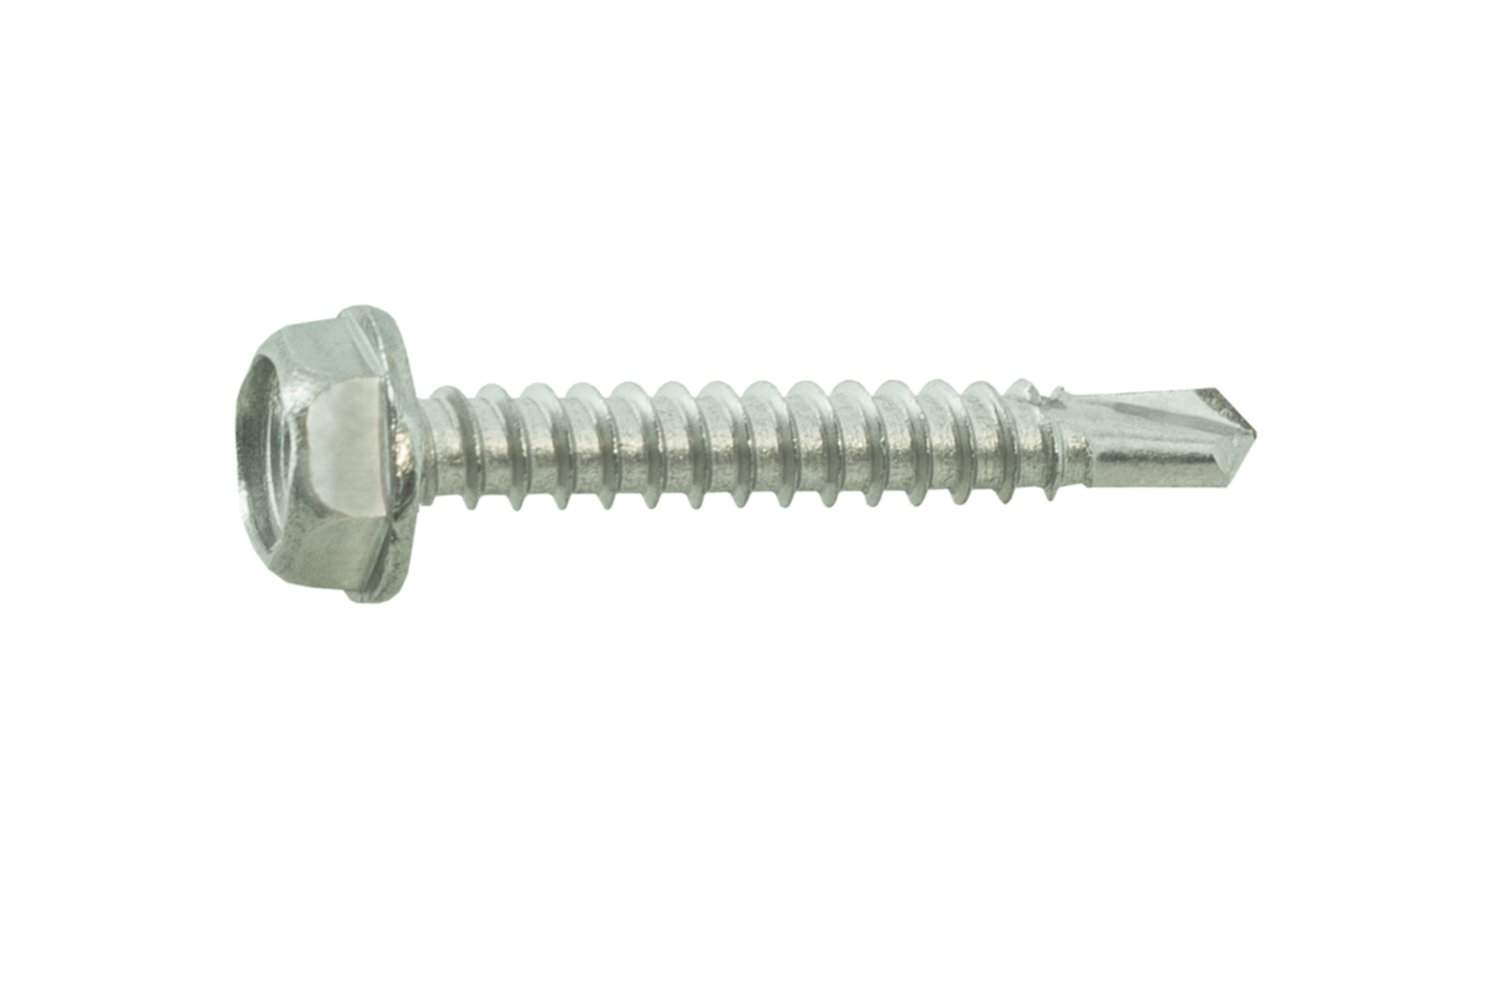 Self-drilling A4 stainless steel hex head sheet metal screws 6.3x32, 7 pcs.